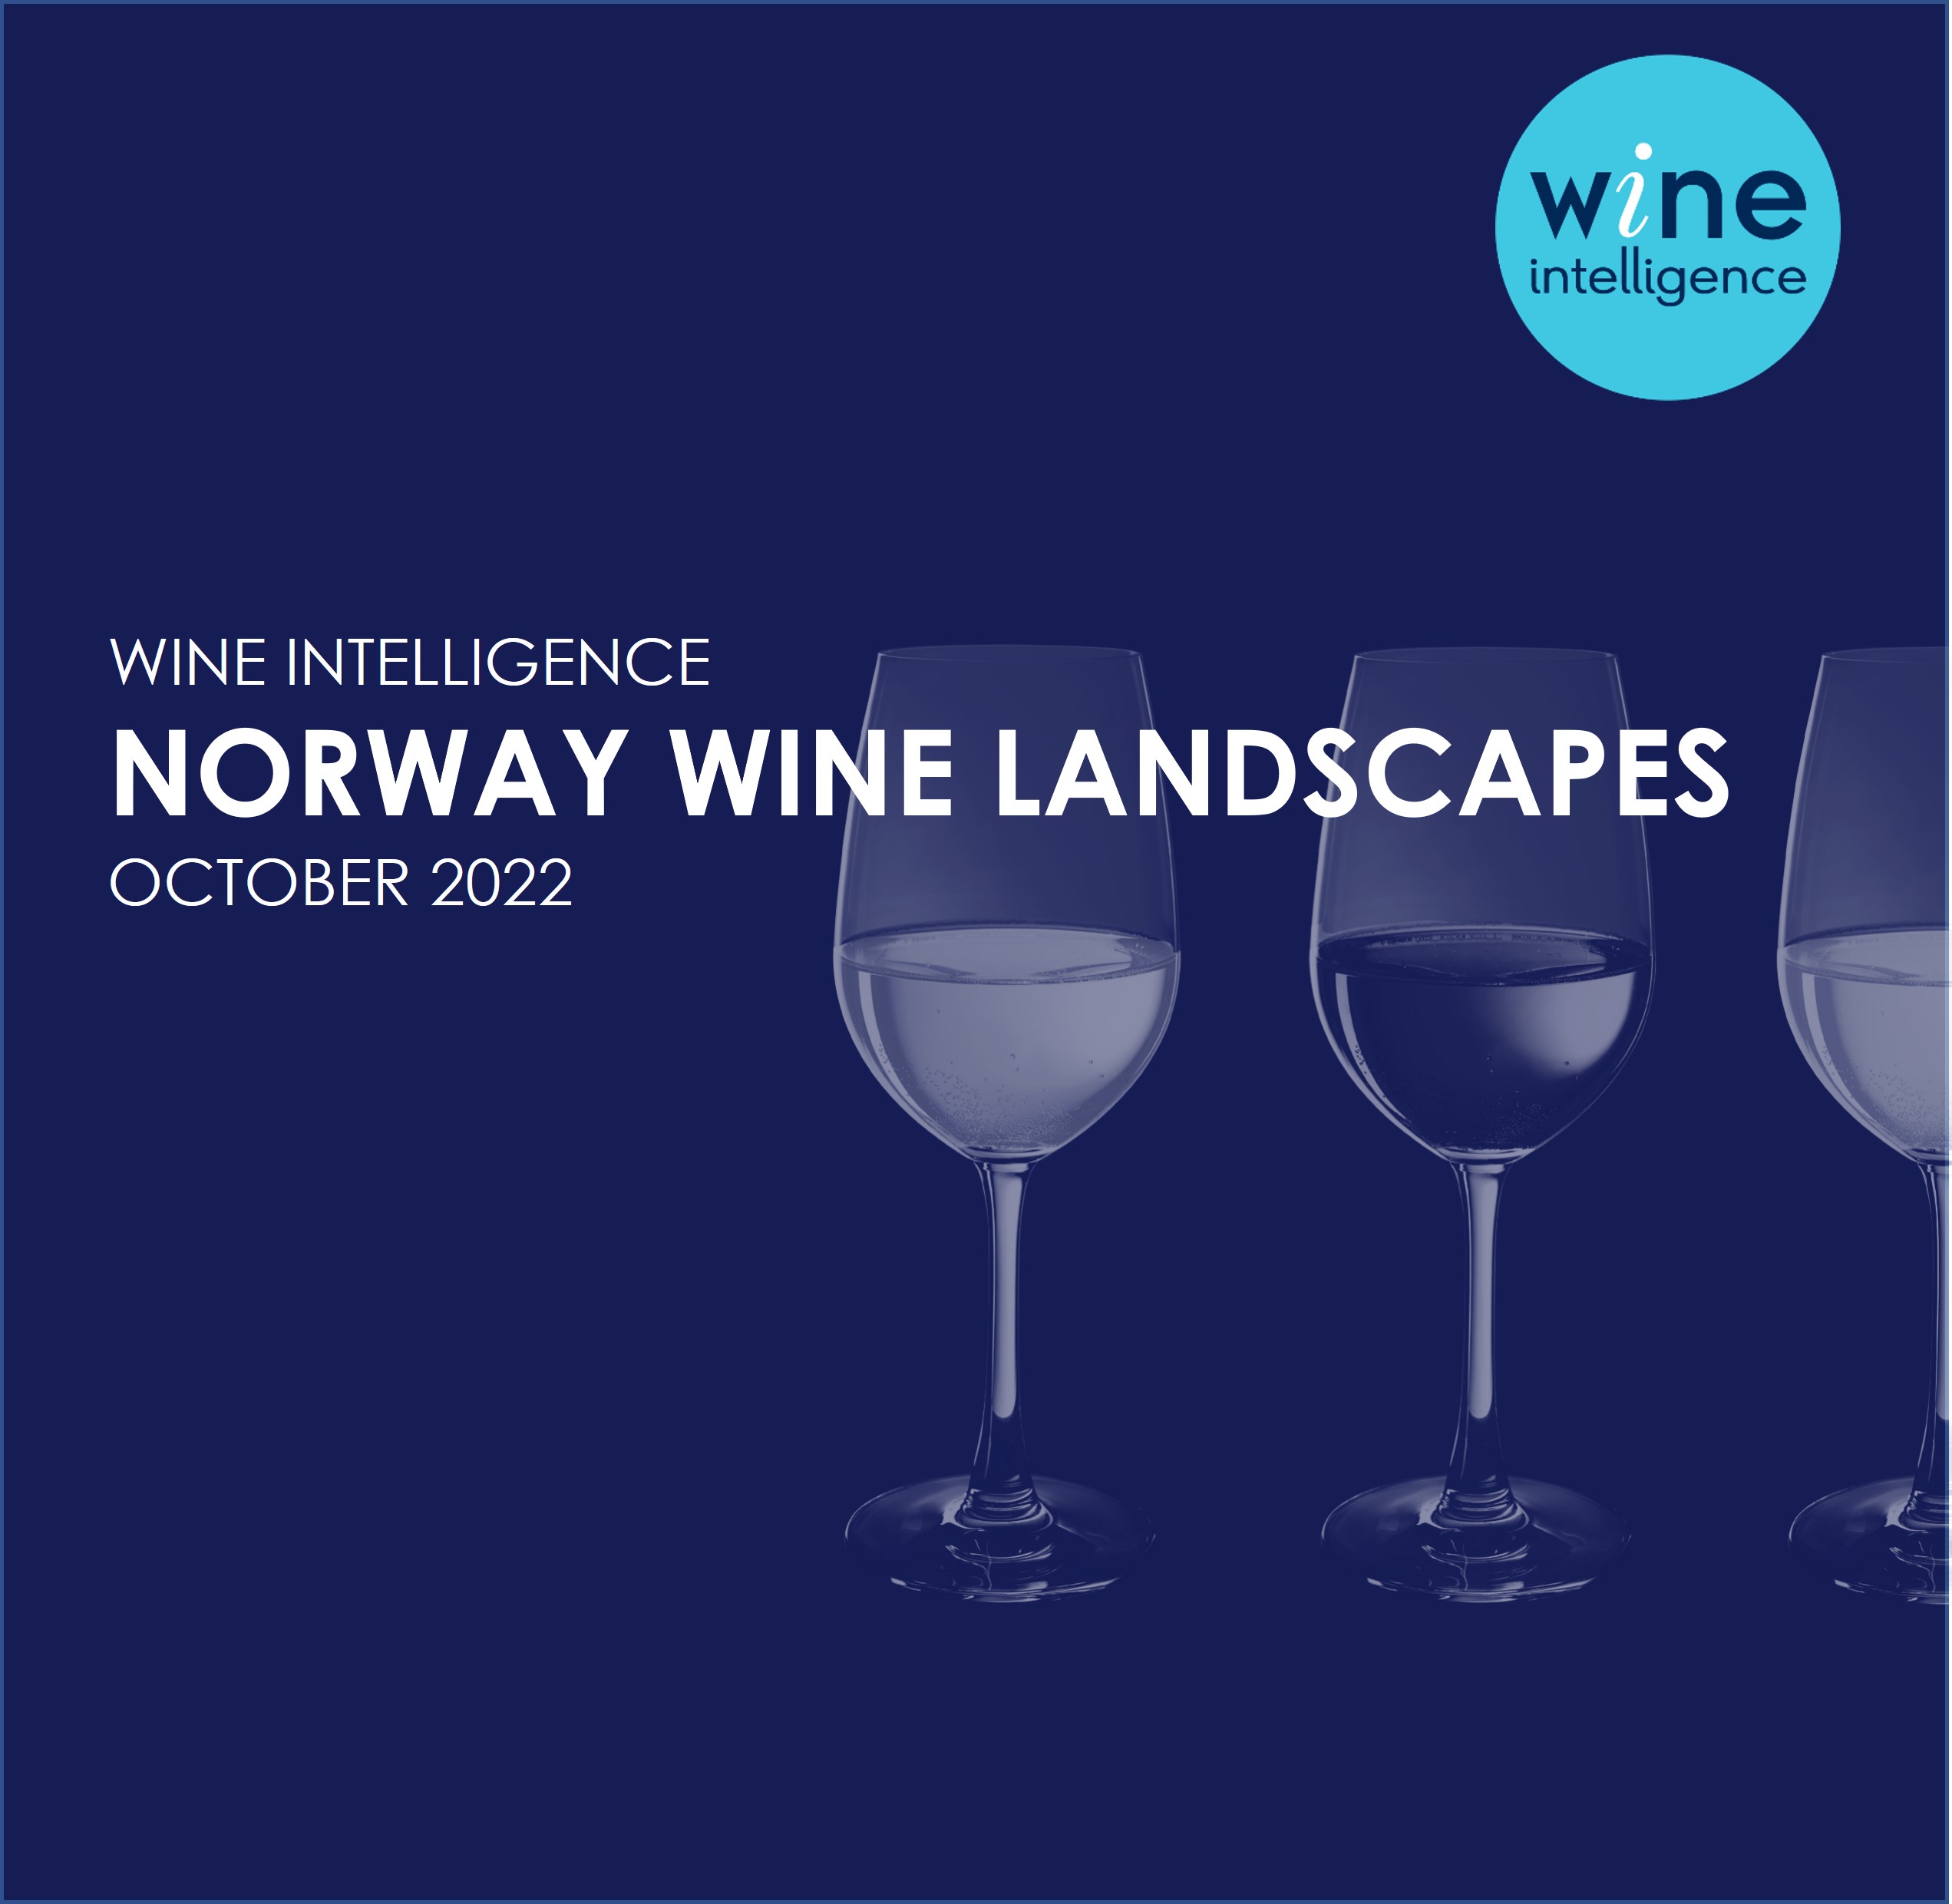 Norway wine landscapes report 2022 - Wine Market Landscape Reports